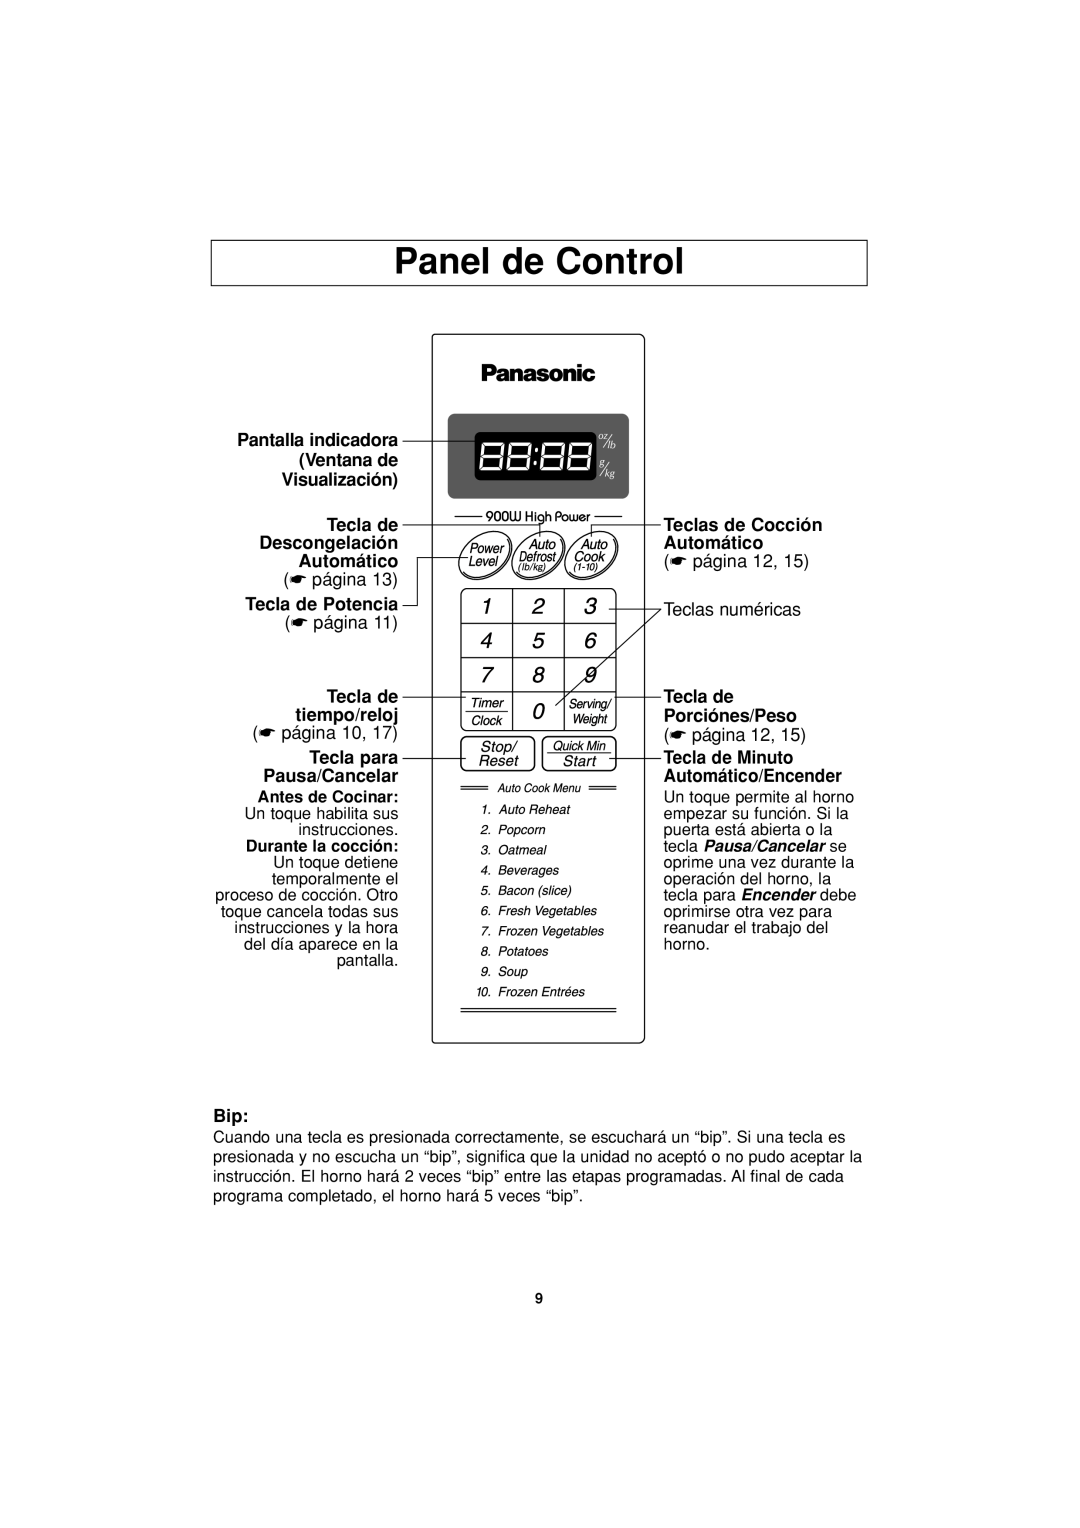 Panasonic NN-S334 important safety instructions Panel de Control 